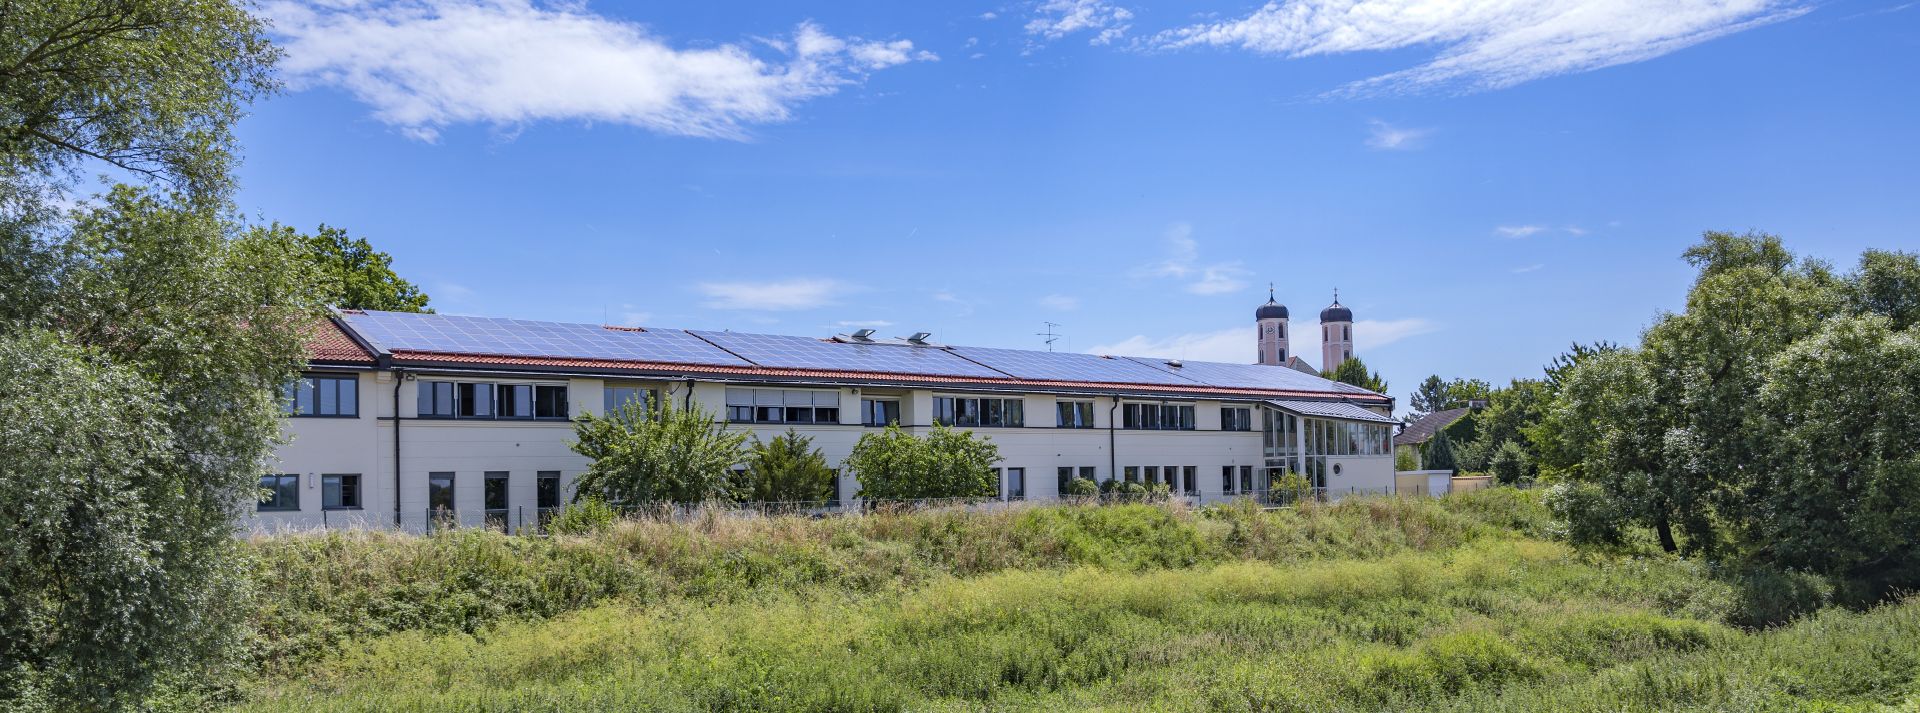 Schulgebäude Albertus Schule